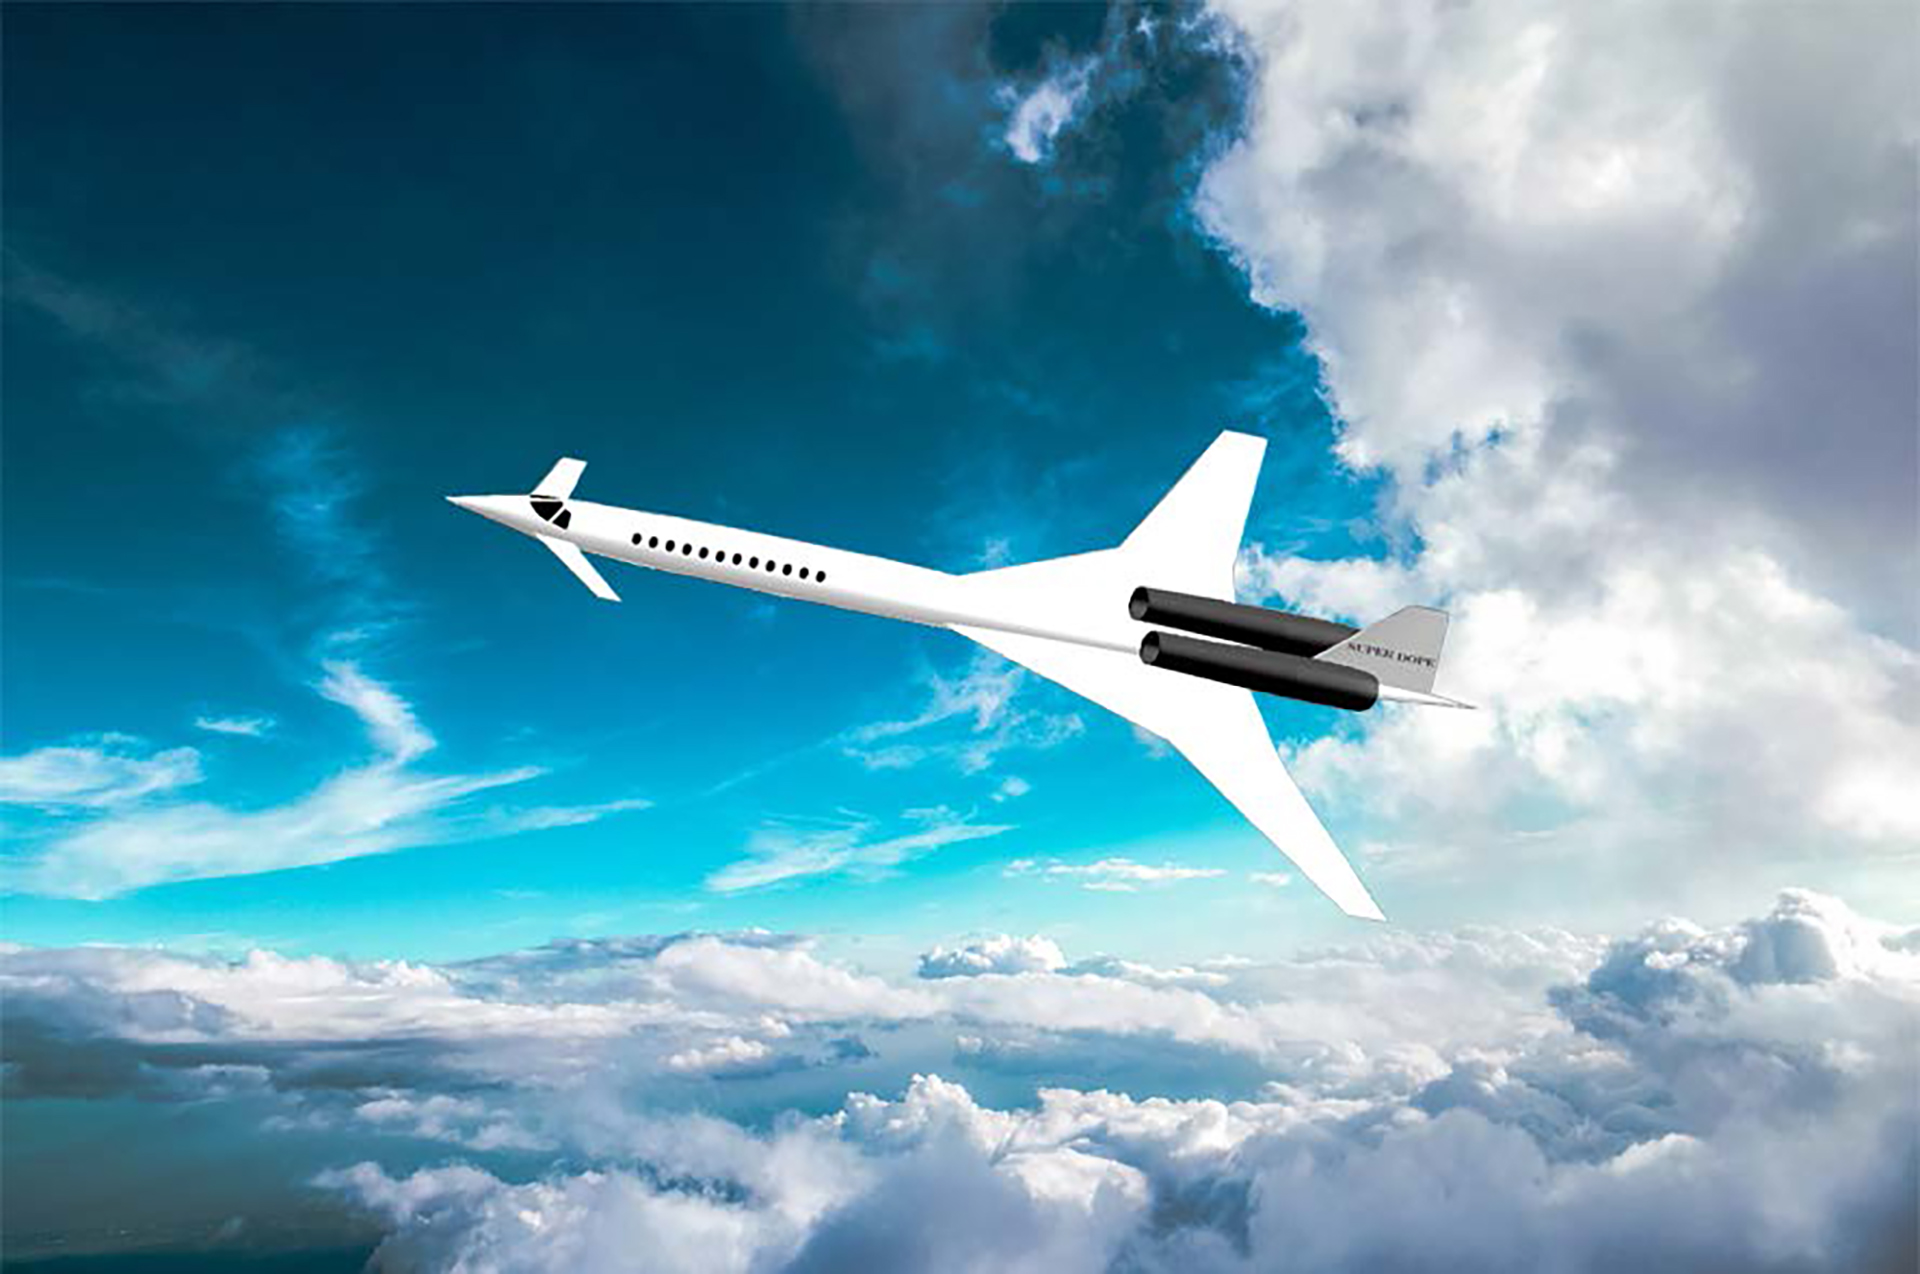 Artist rendering of the Super Comet aircraft in flight.